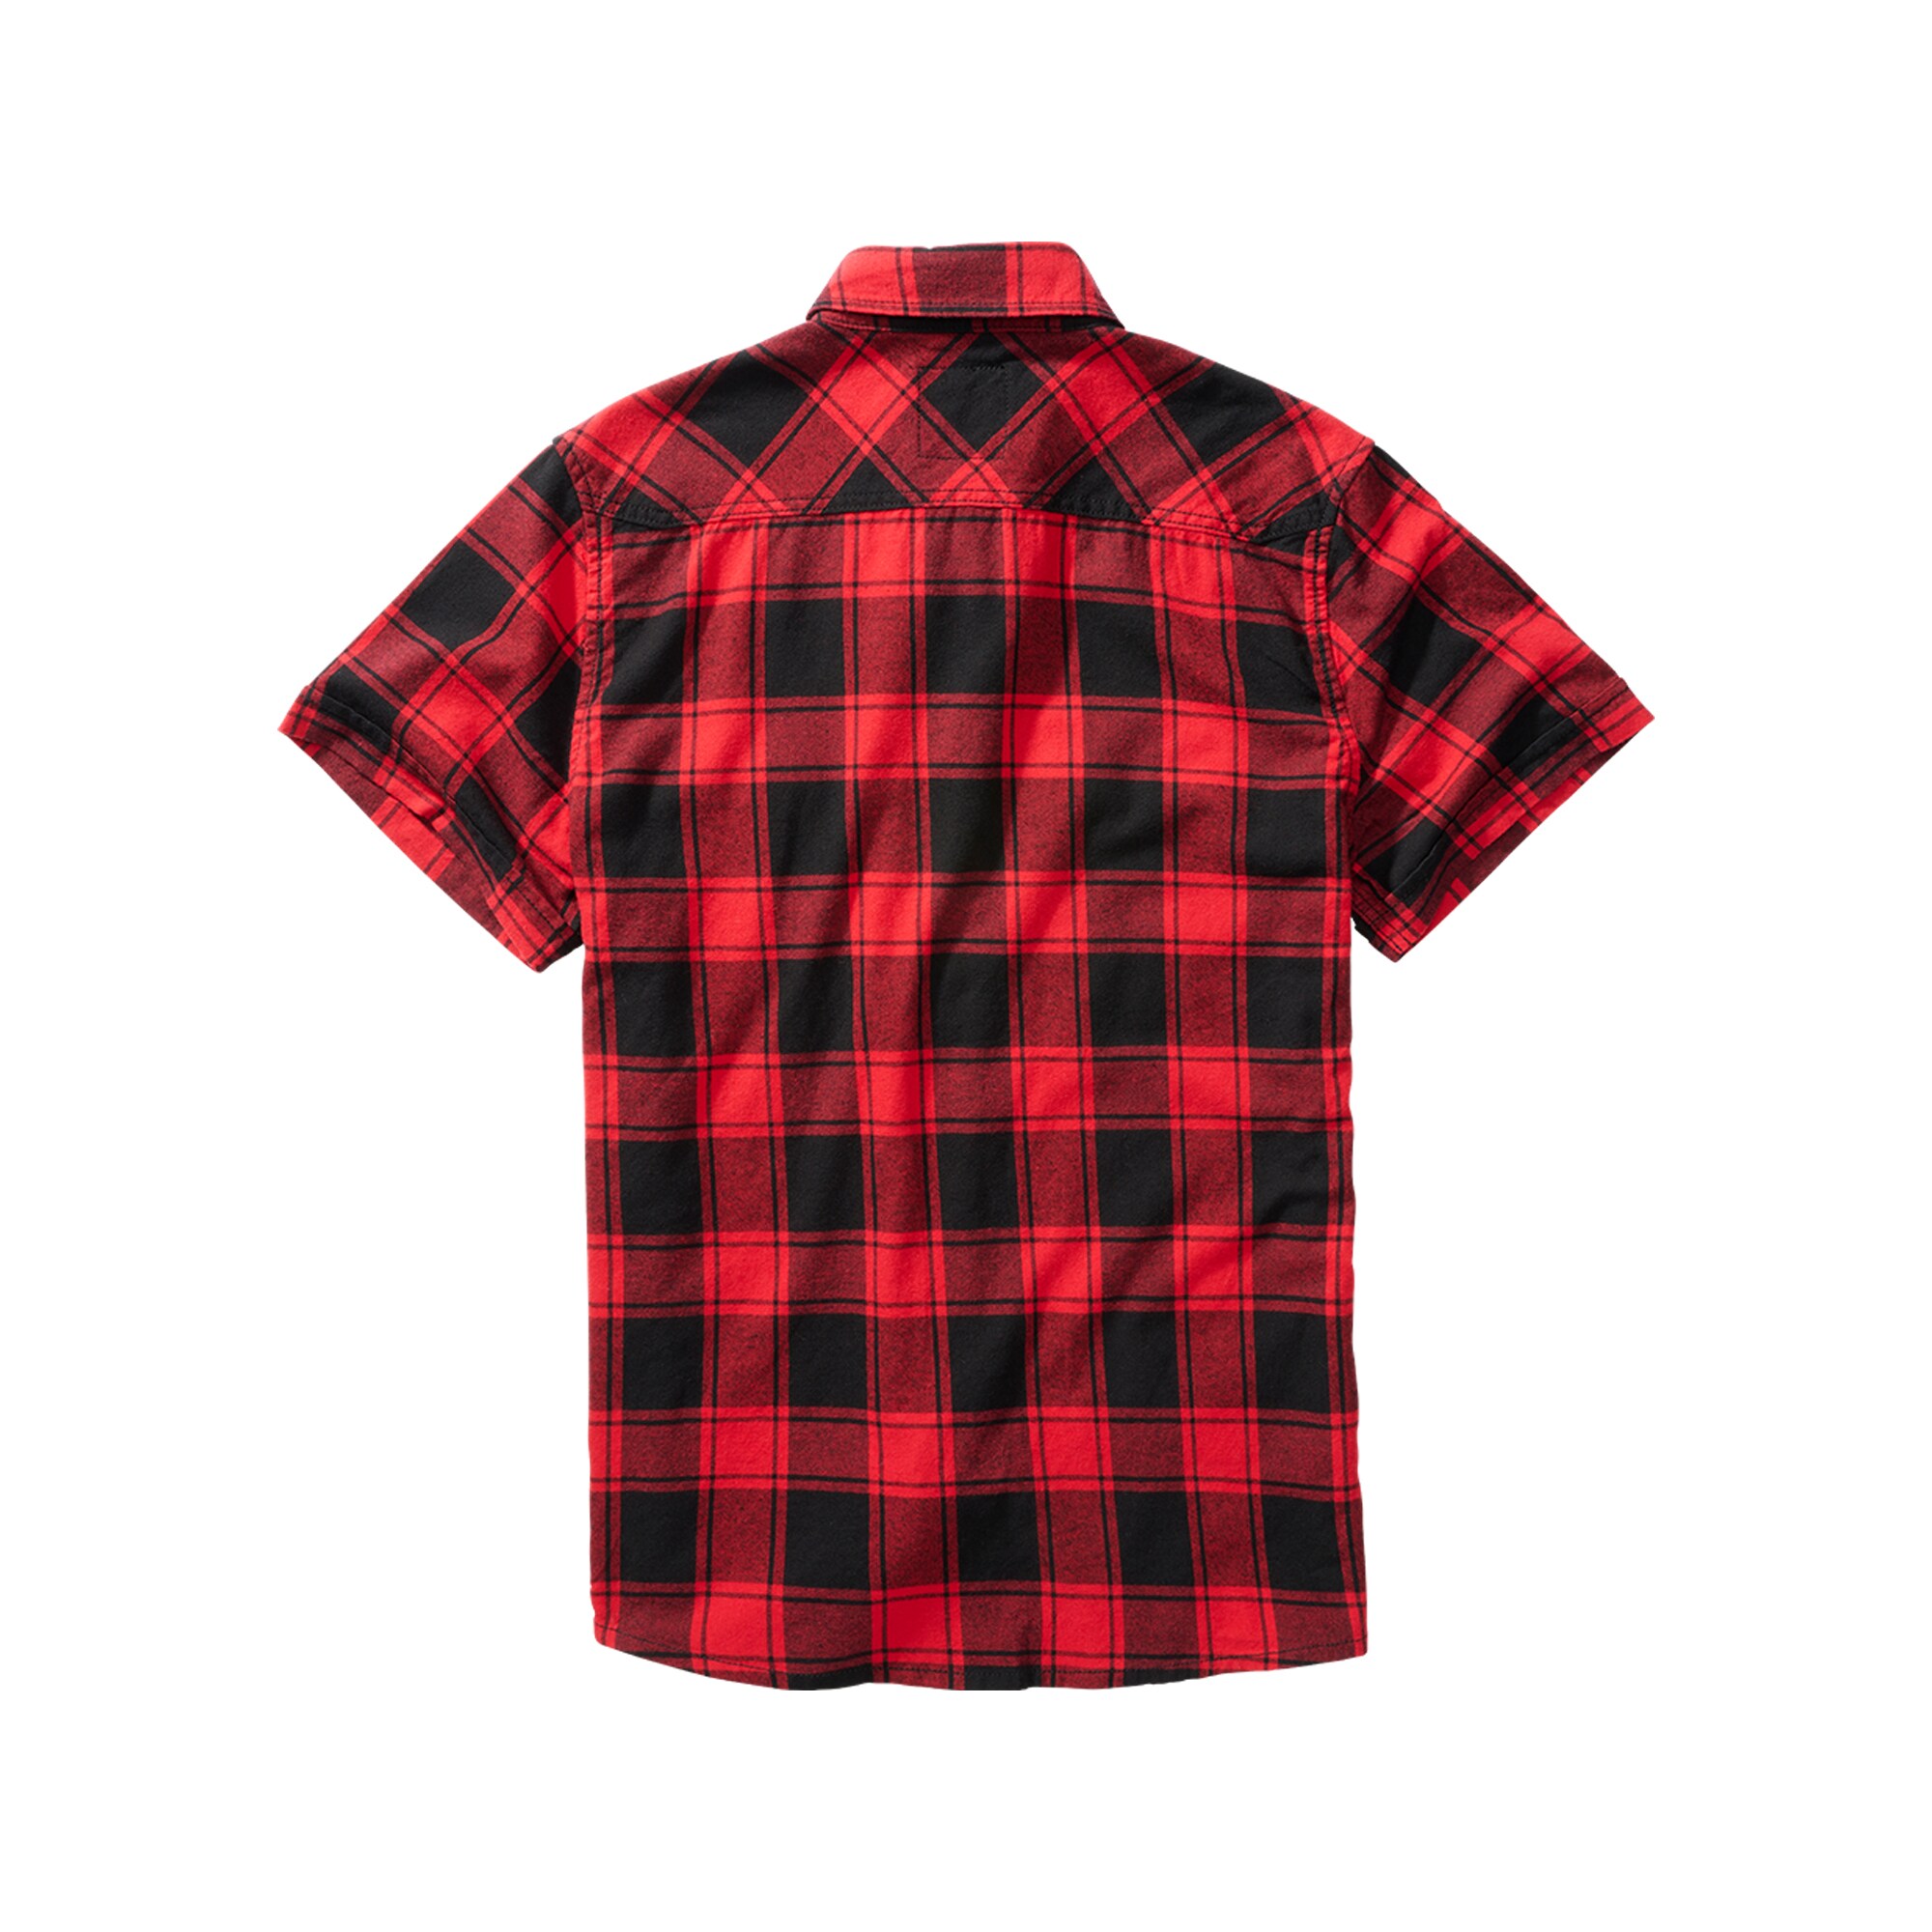 Purchase the Brandit Half Shirt ASMC by Sleeve red/black Check